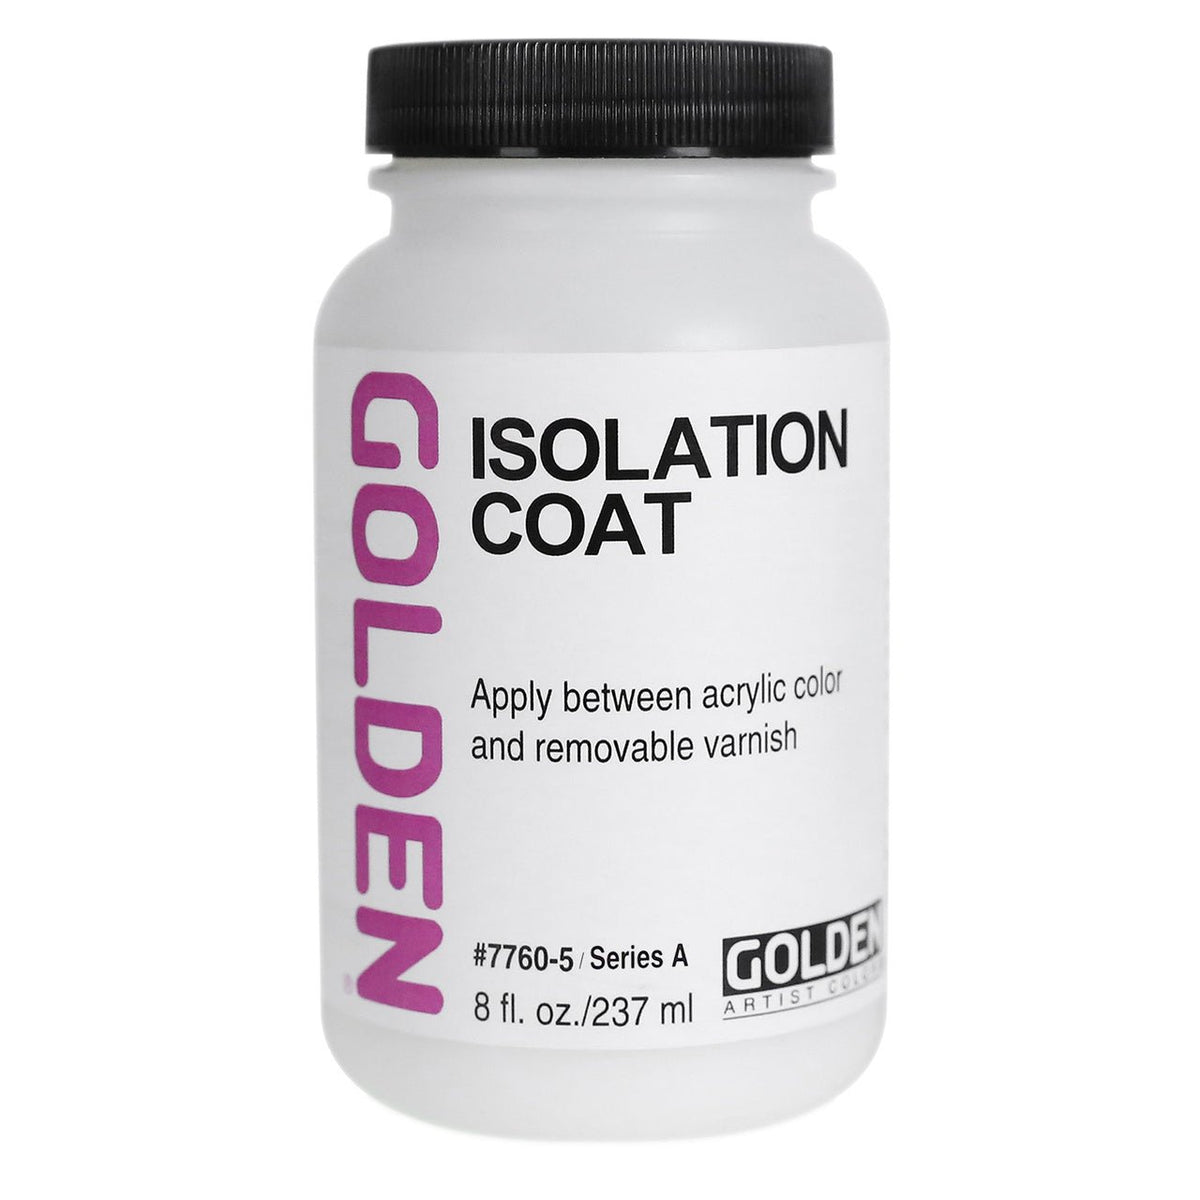 Golden Isolation Coat 8 oz - merriartist.com